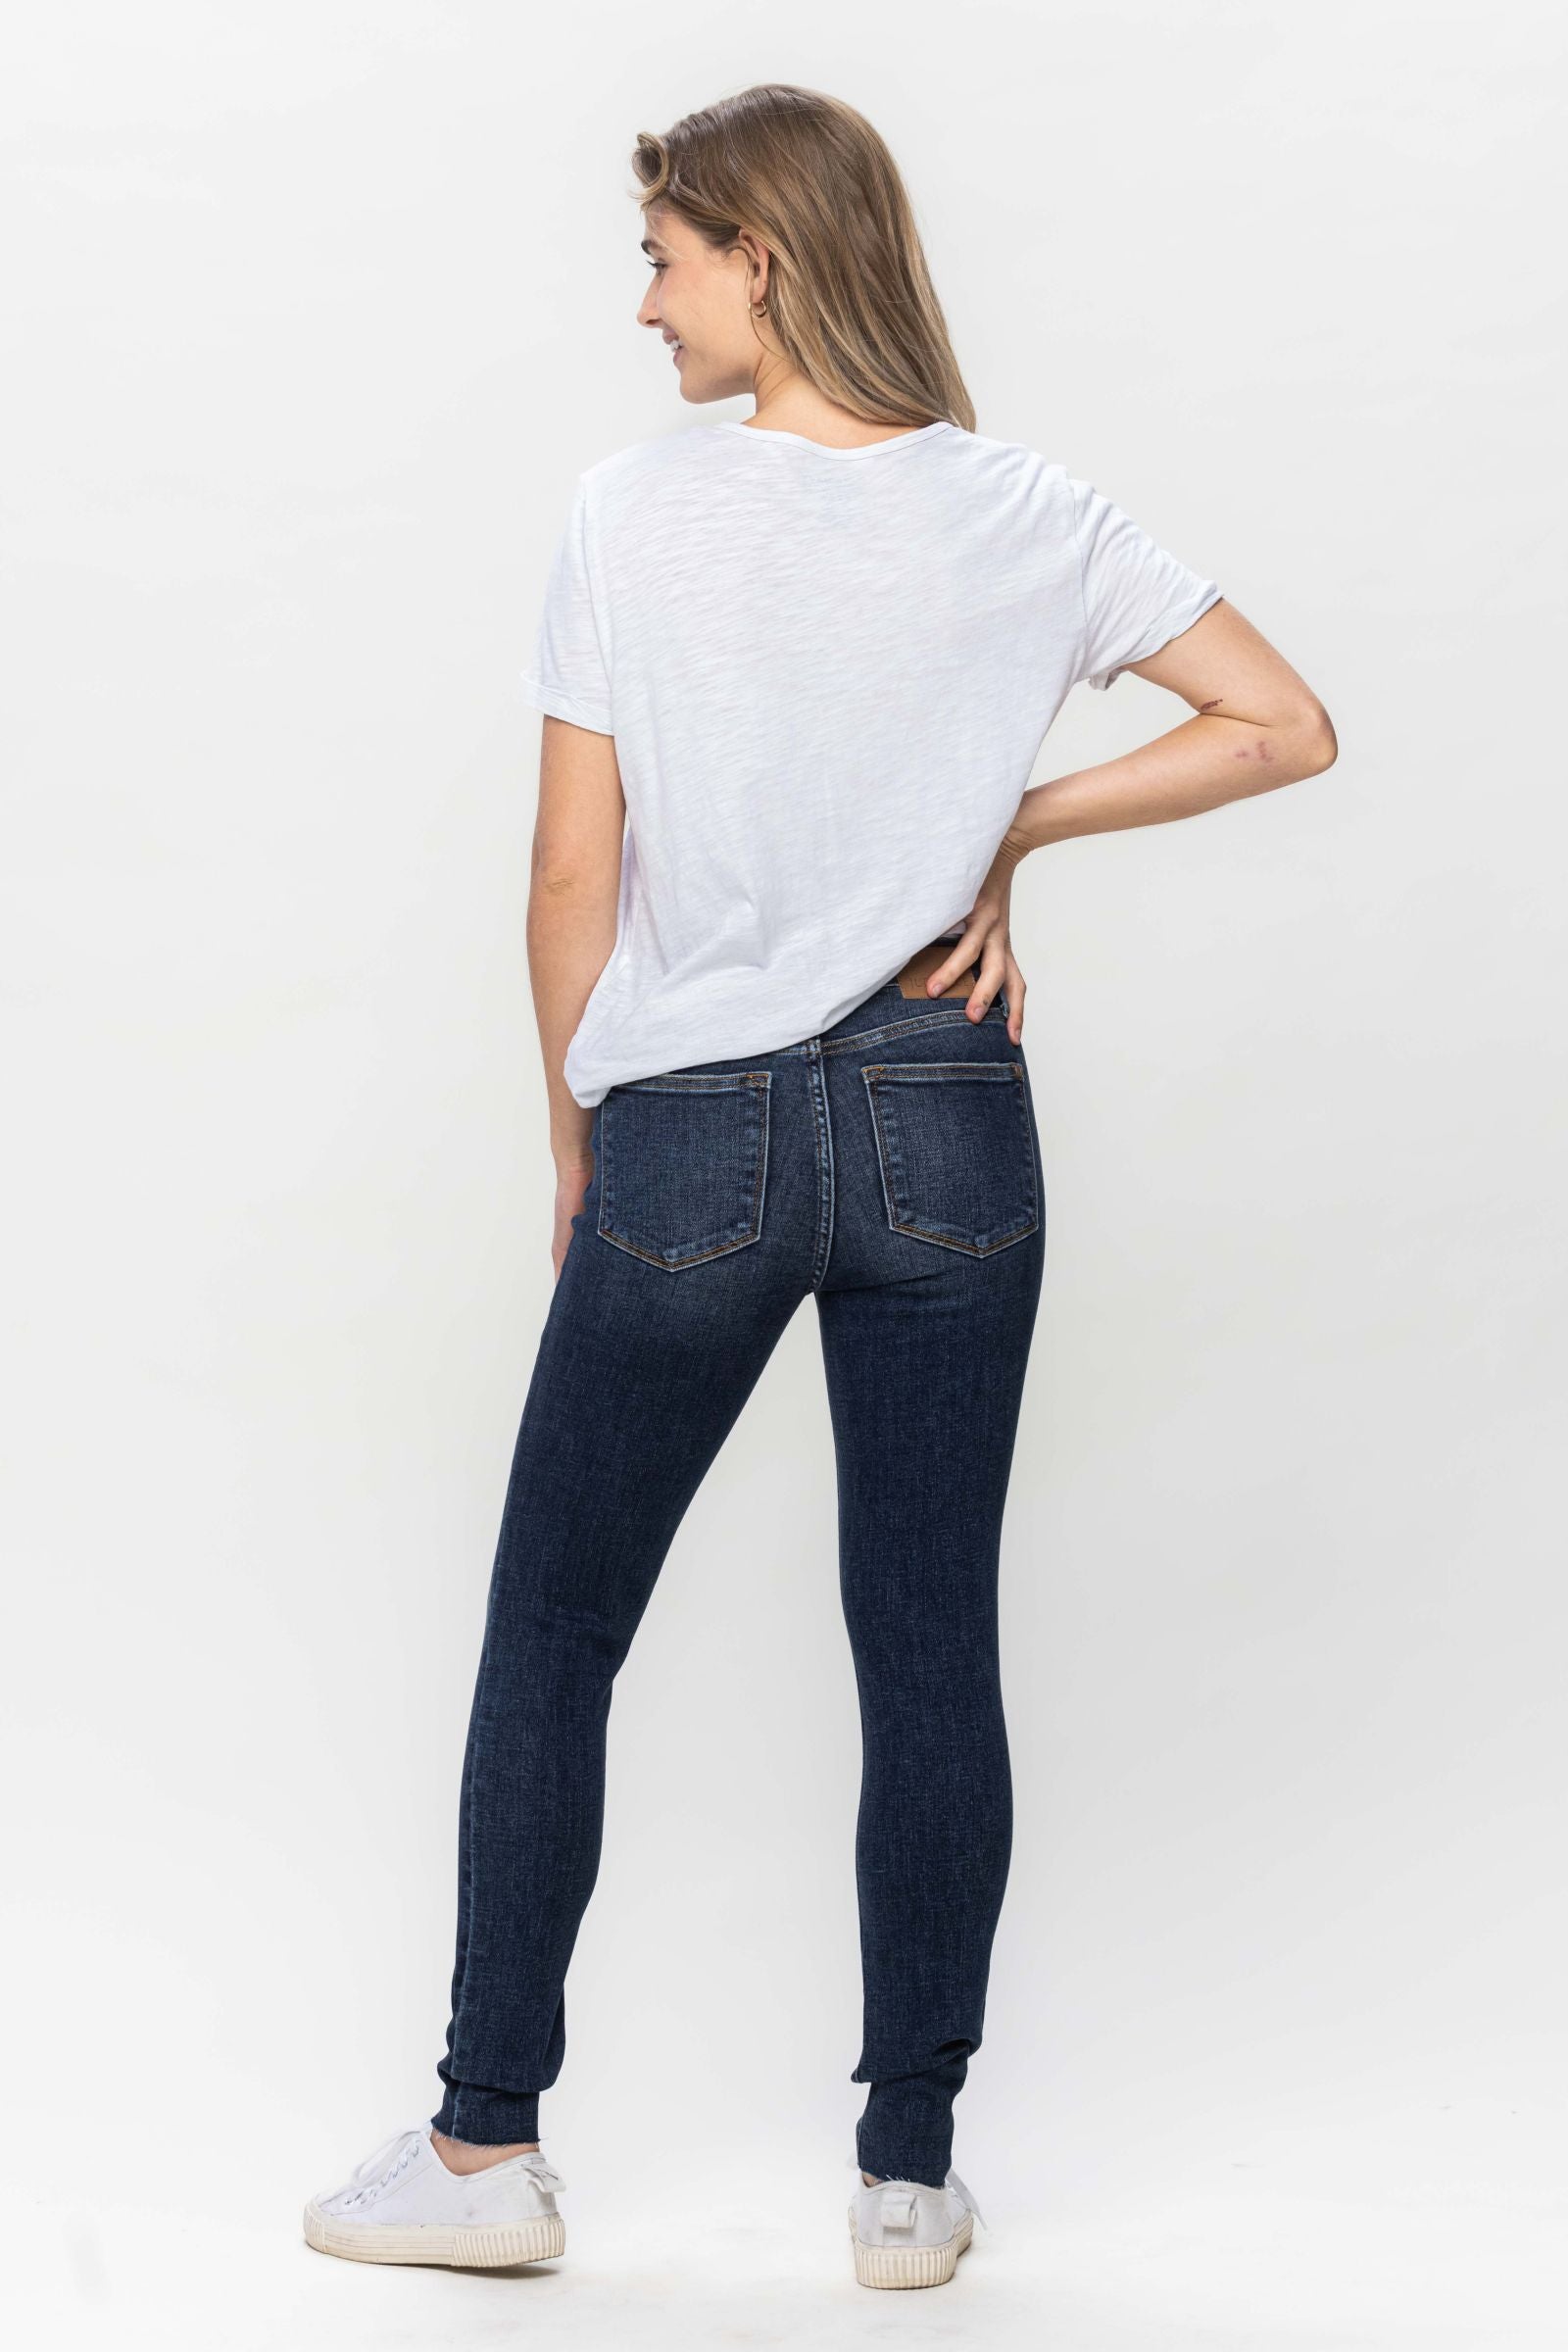 Cheri Jeans by Judy Blue